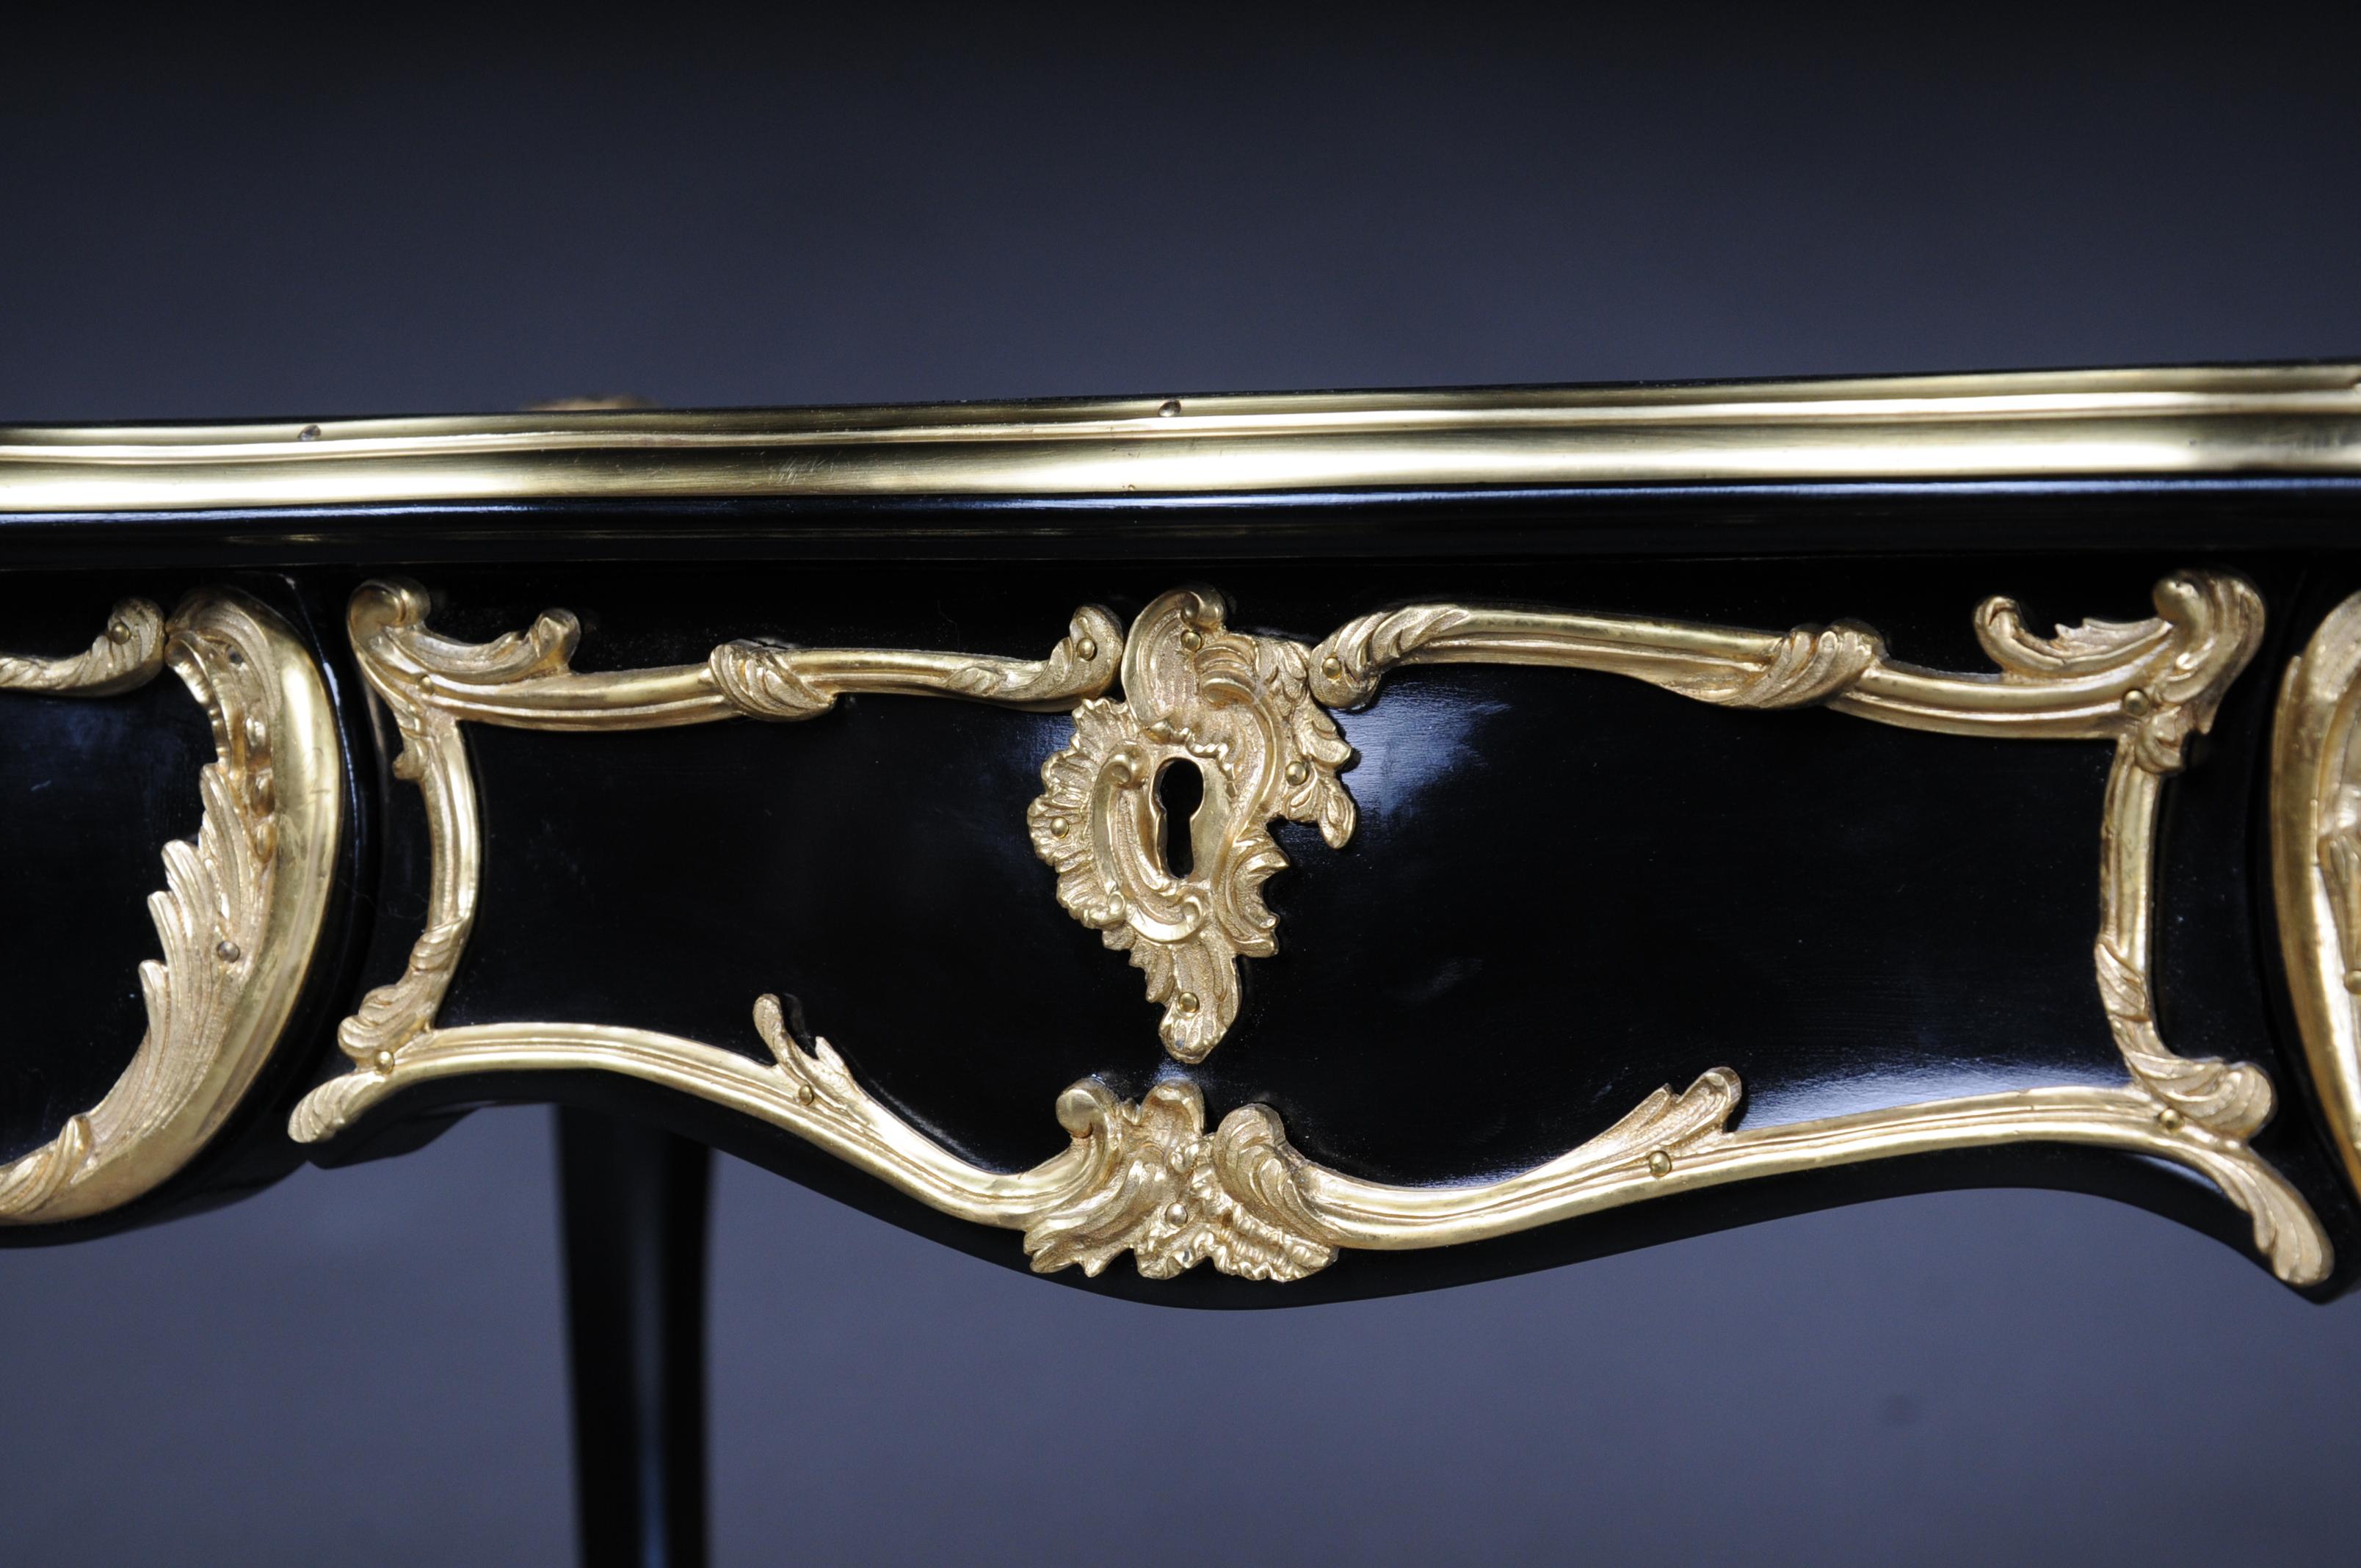 20th Century Elegant Black Bureau Plat / Writing Desk in Louis XV, Beech For Sale 6